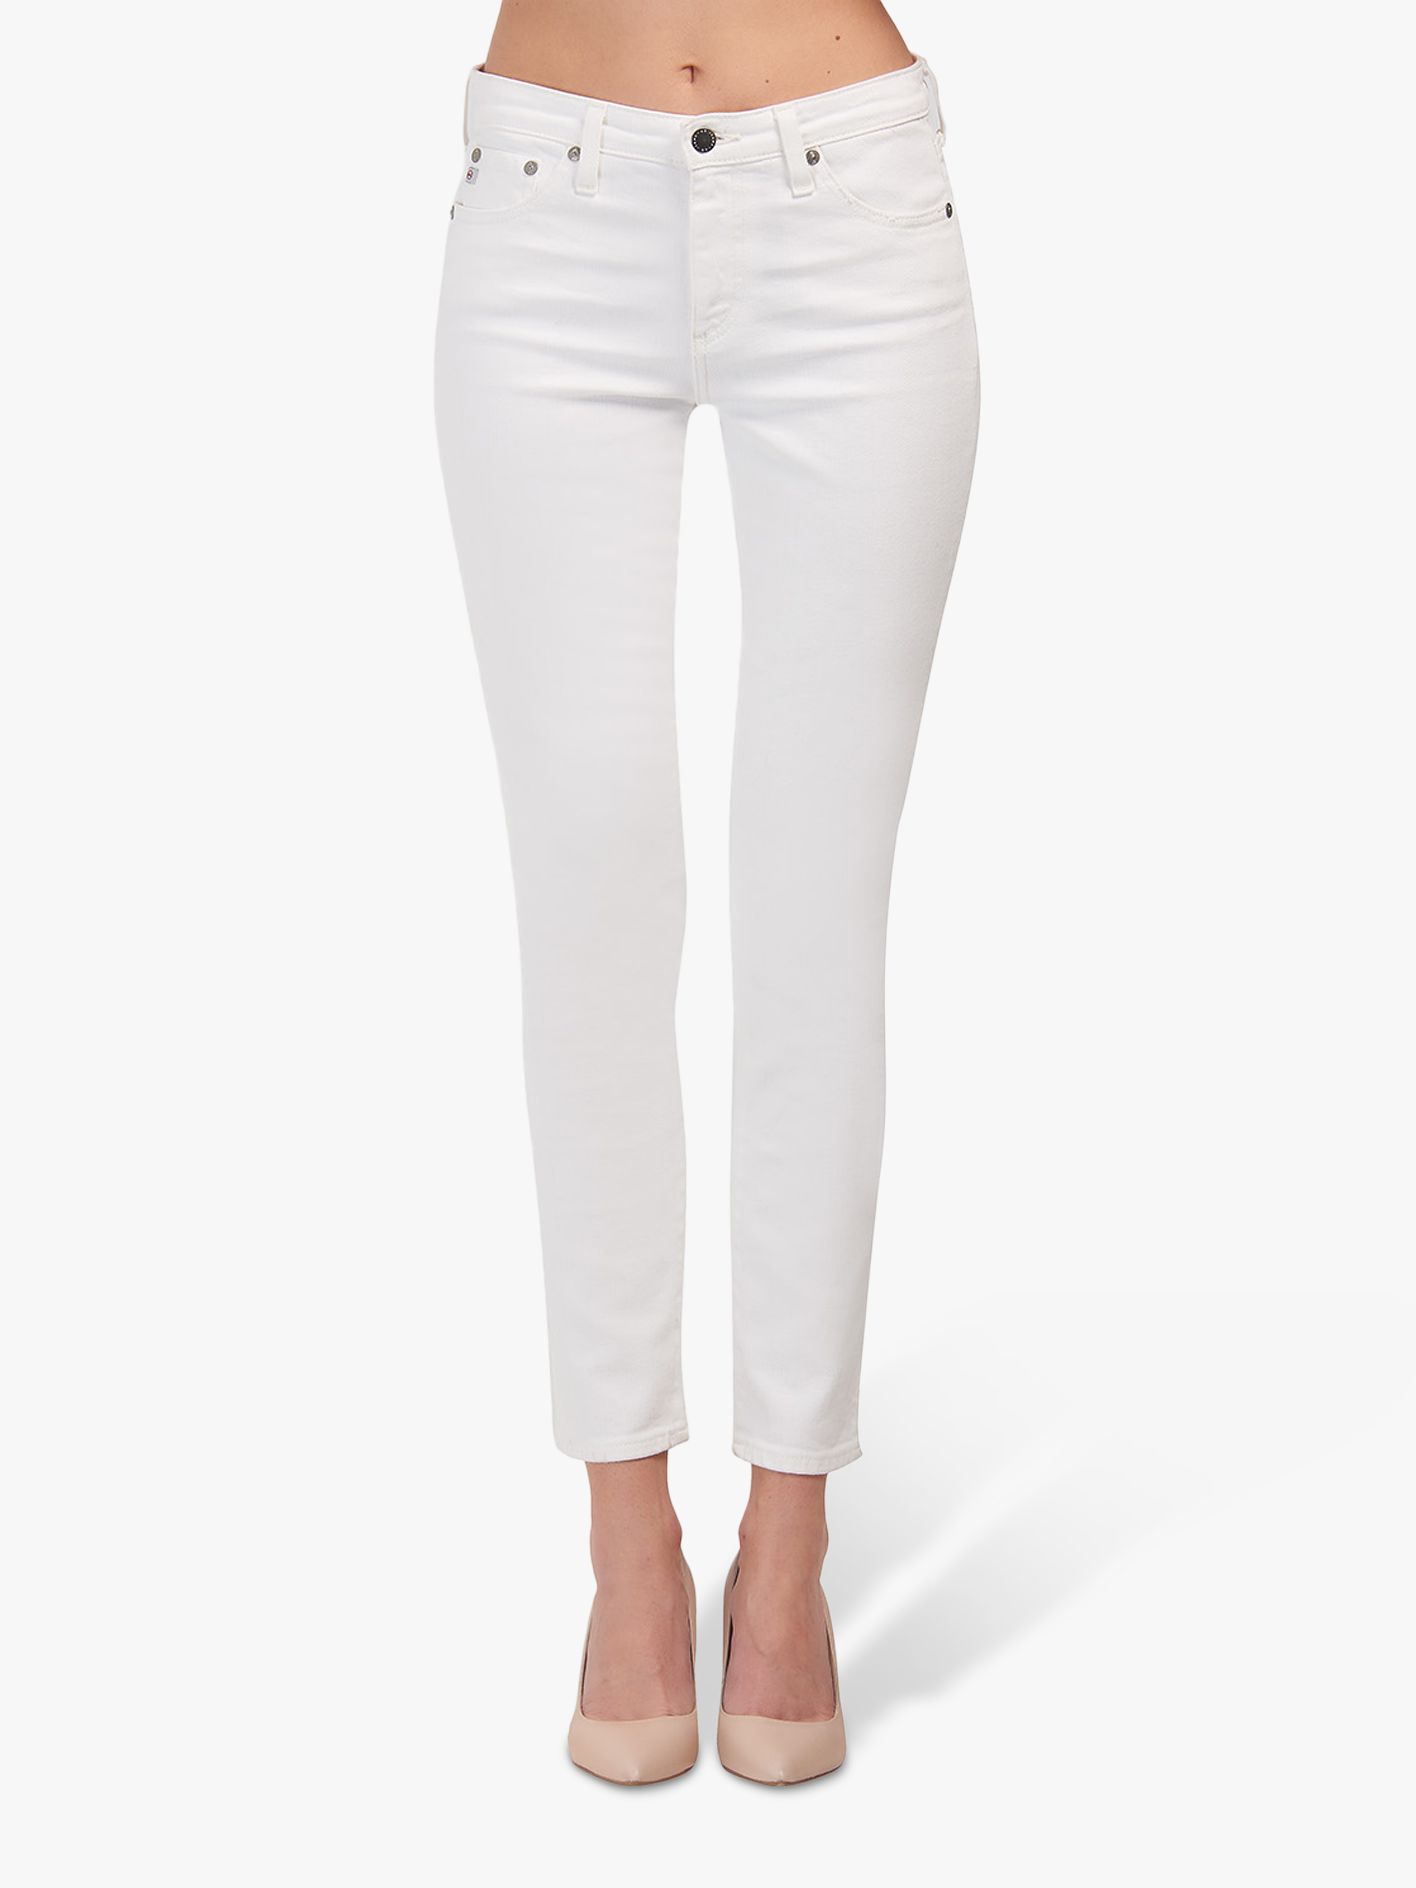 ag prima white jeans